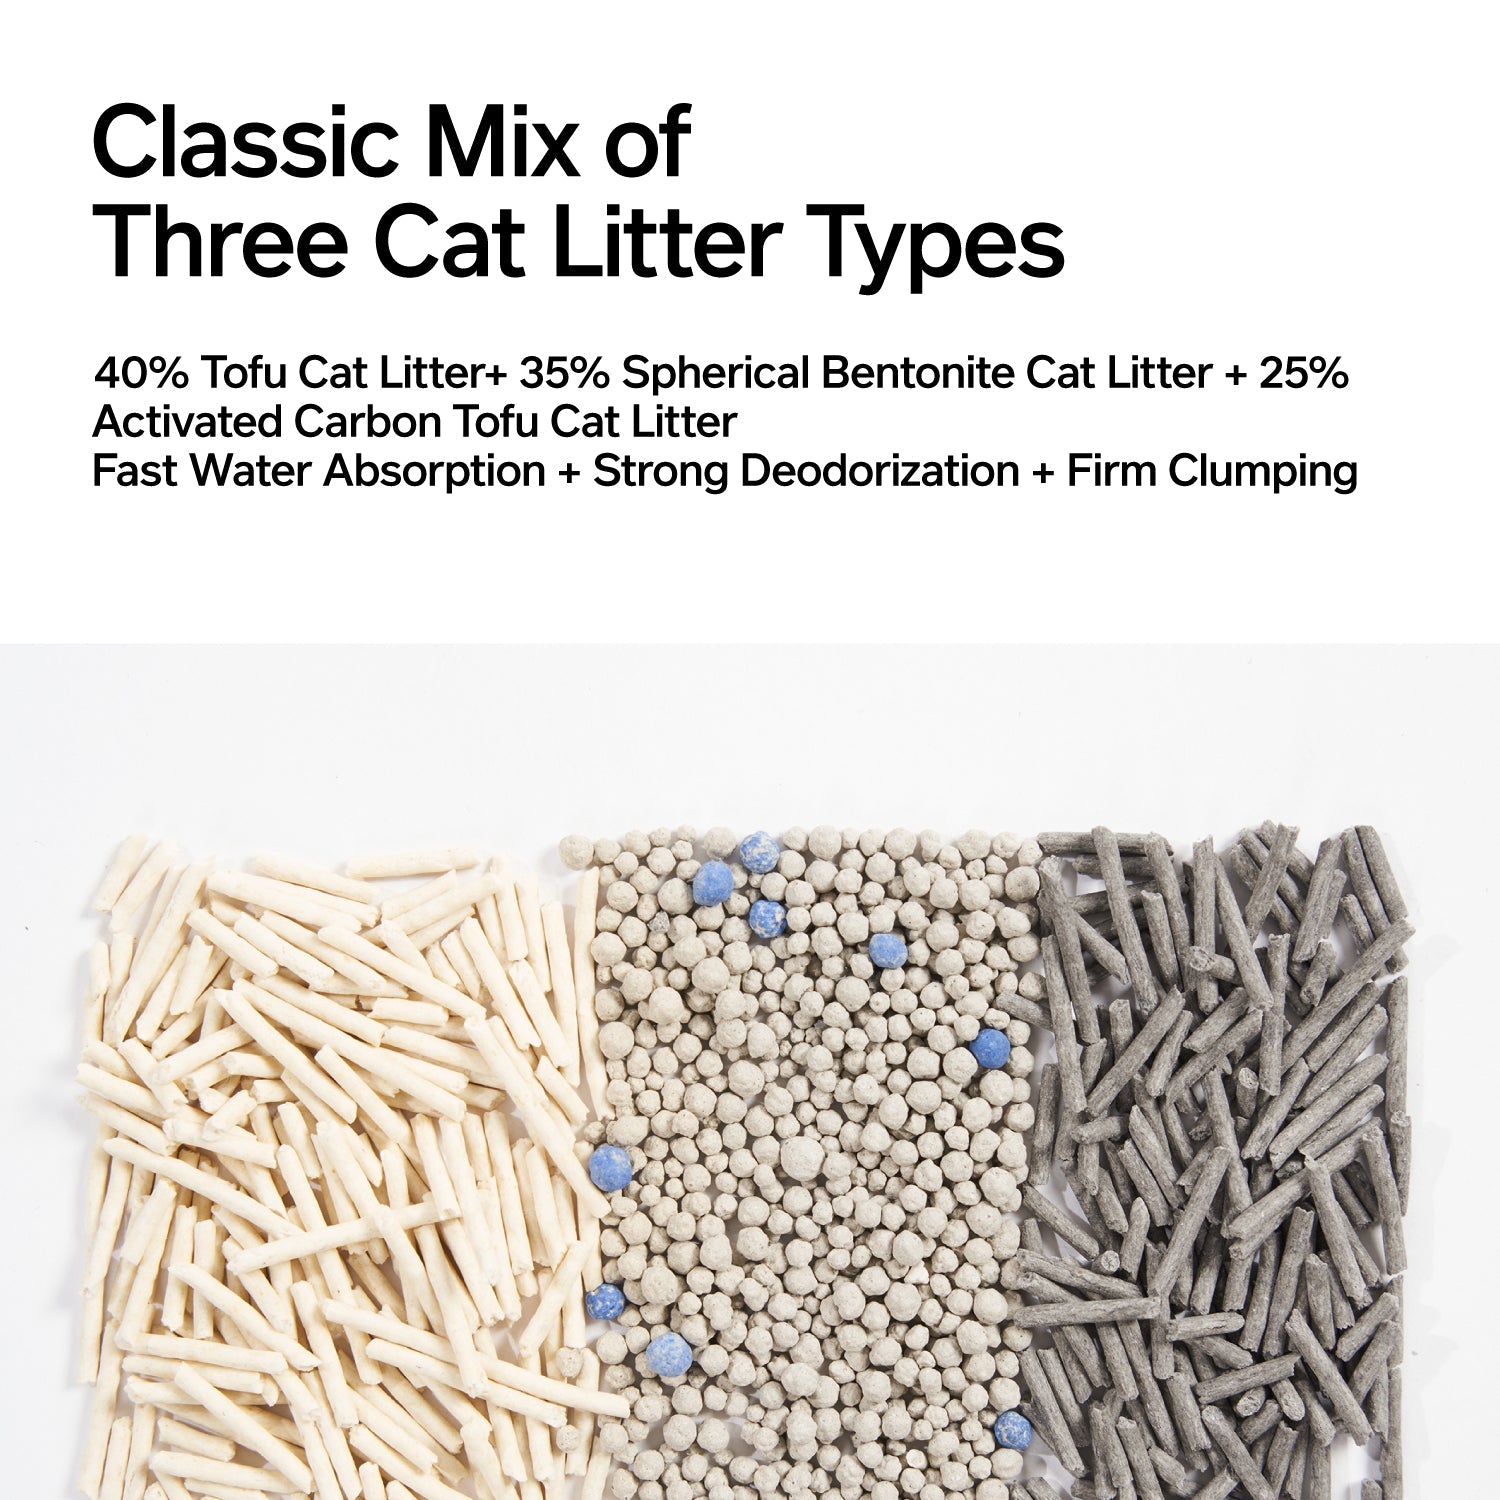 PIDAN 3-in-1 Premium Mixed Cat Litter